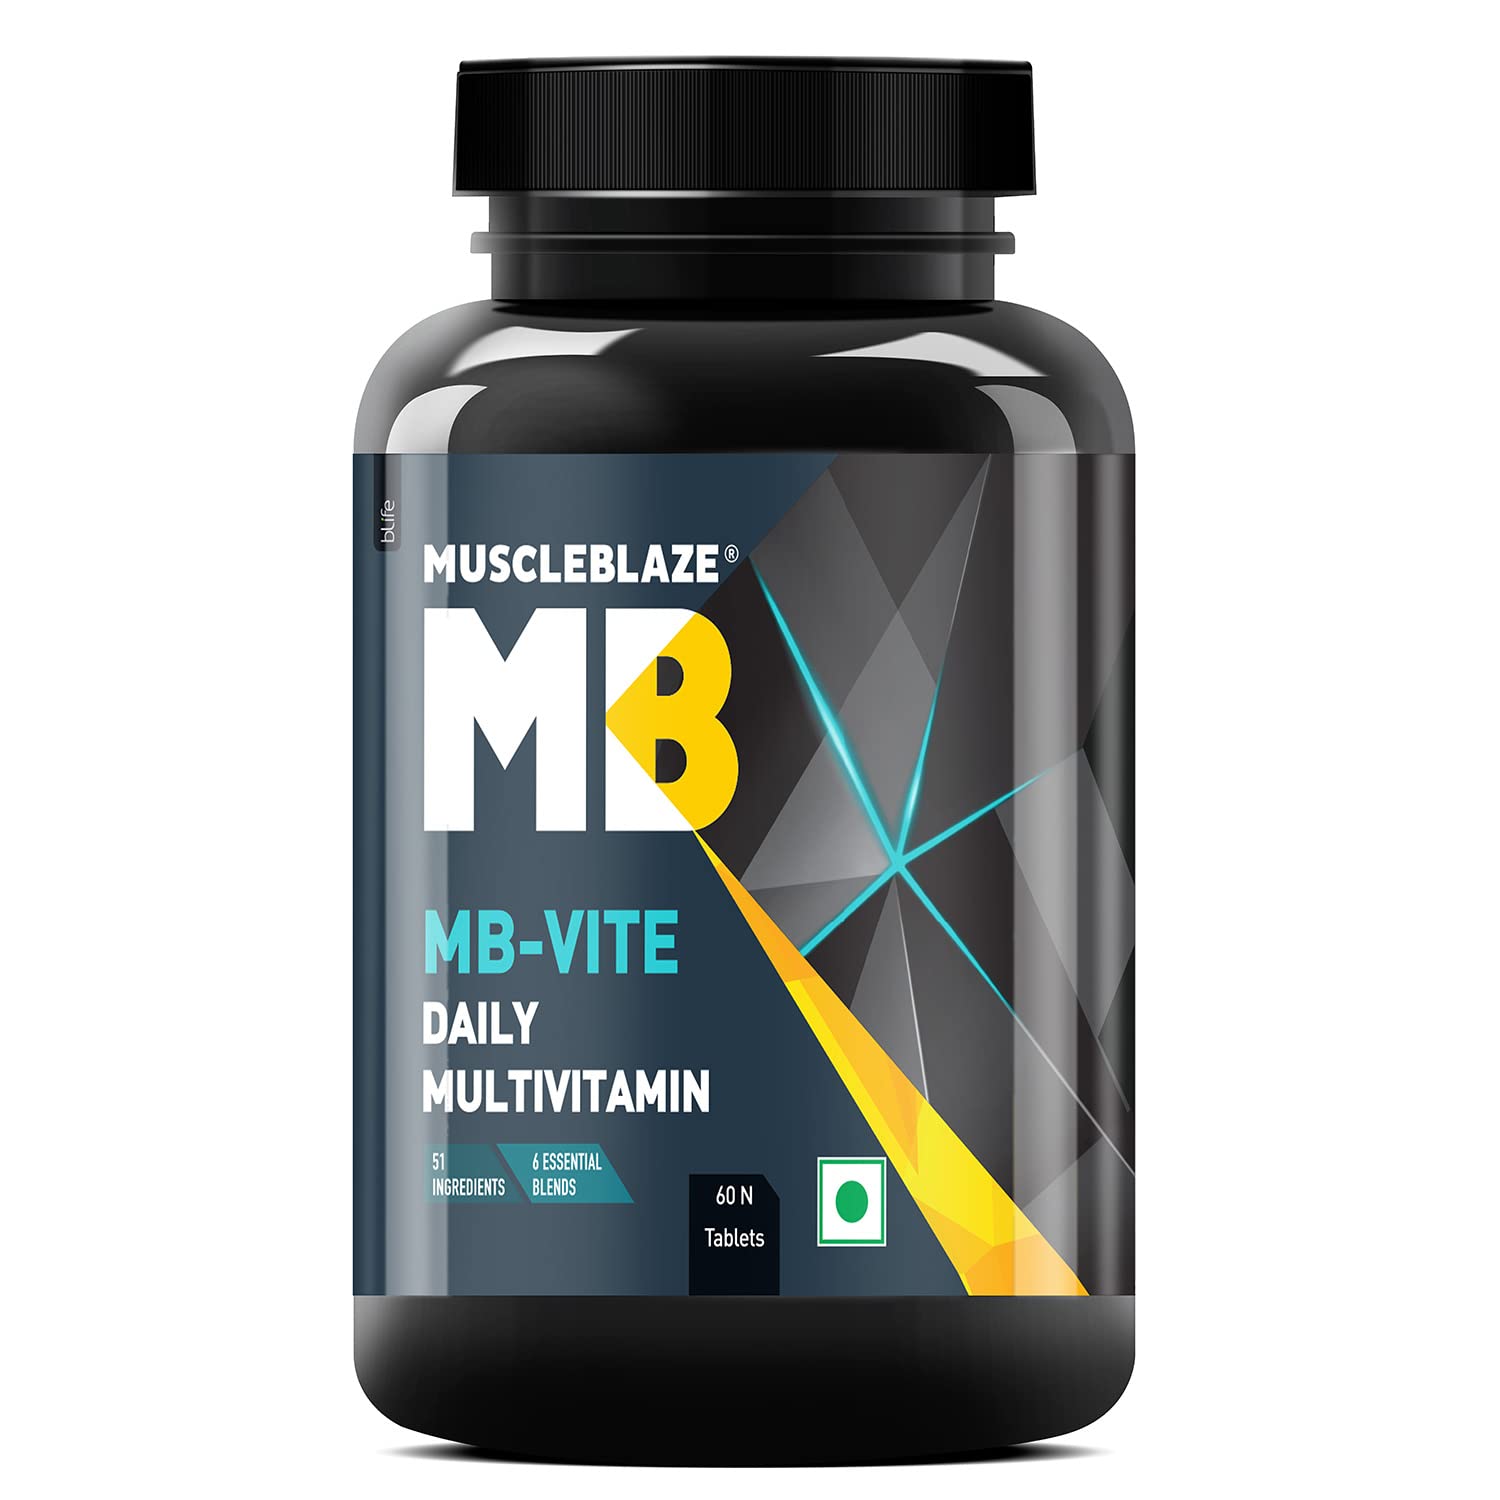 MuscleBlaze MB-VITE Multivitamin - 60 Tablets